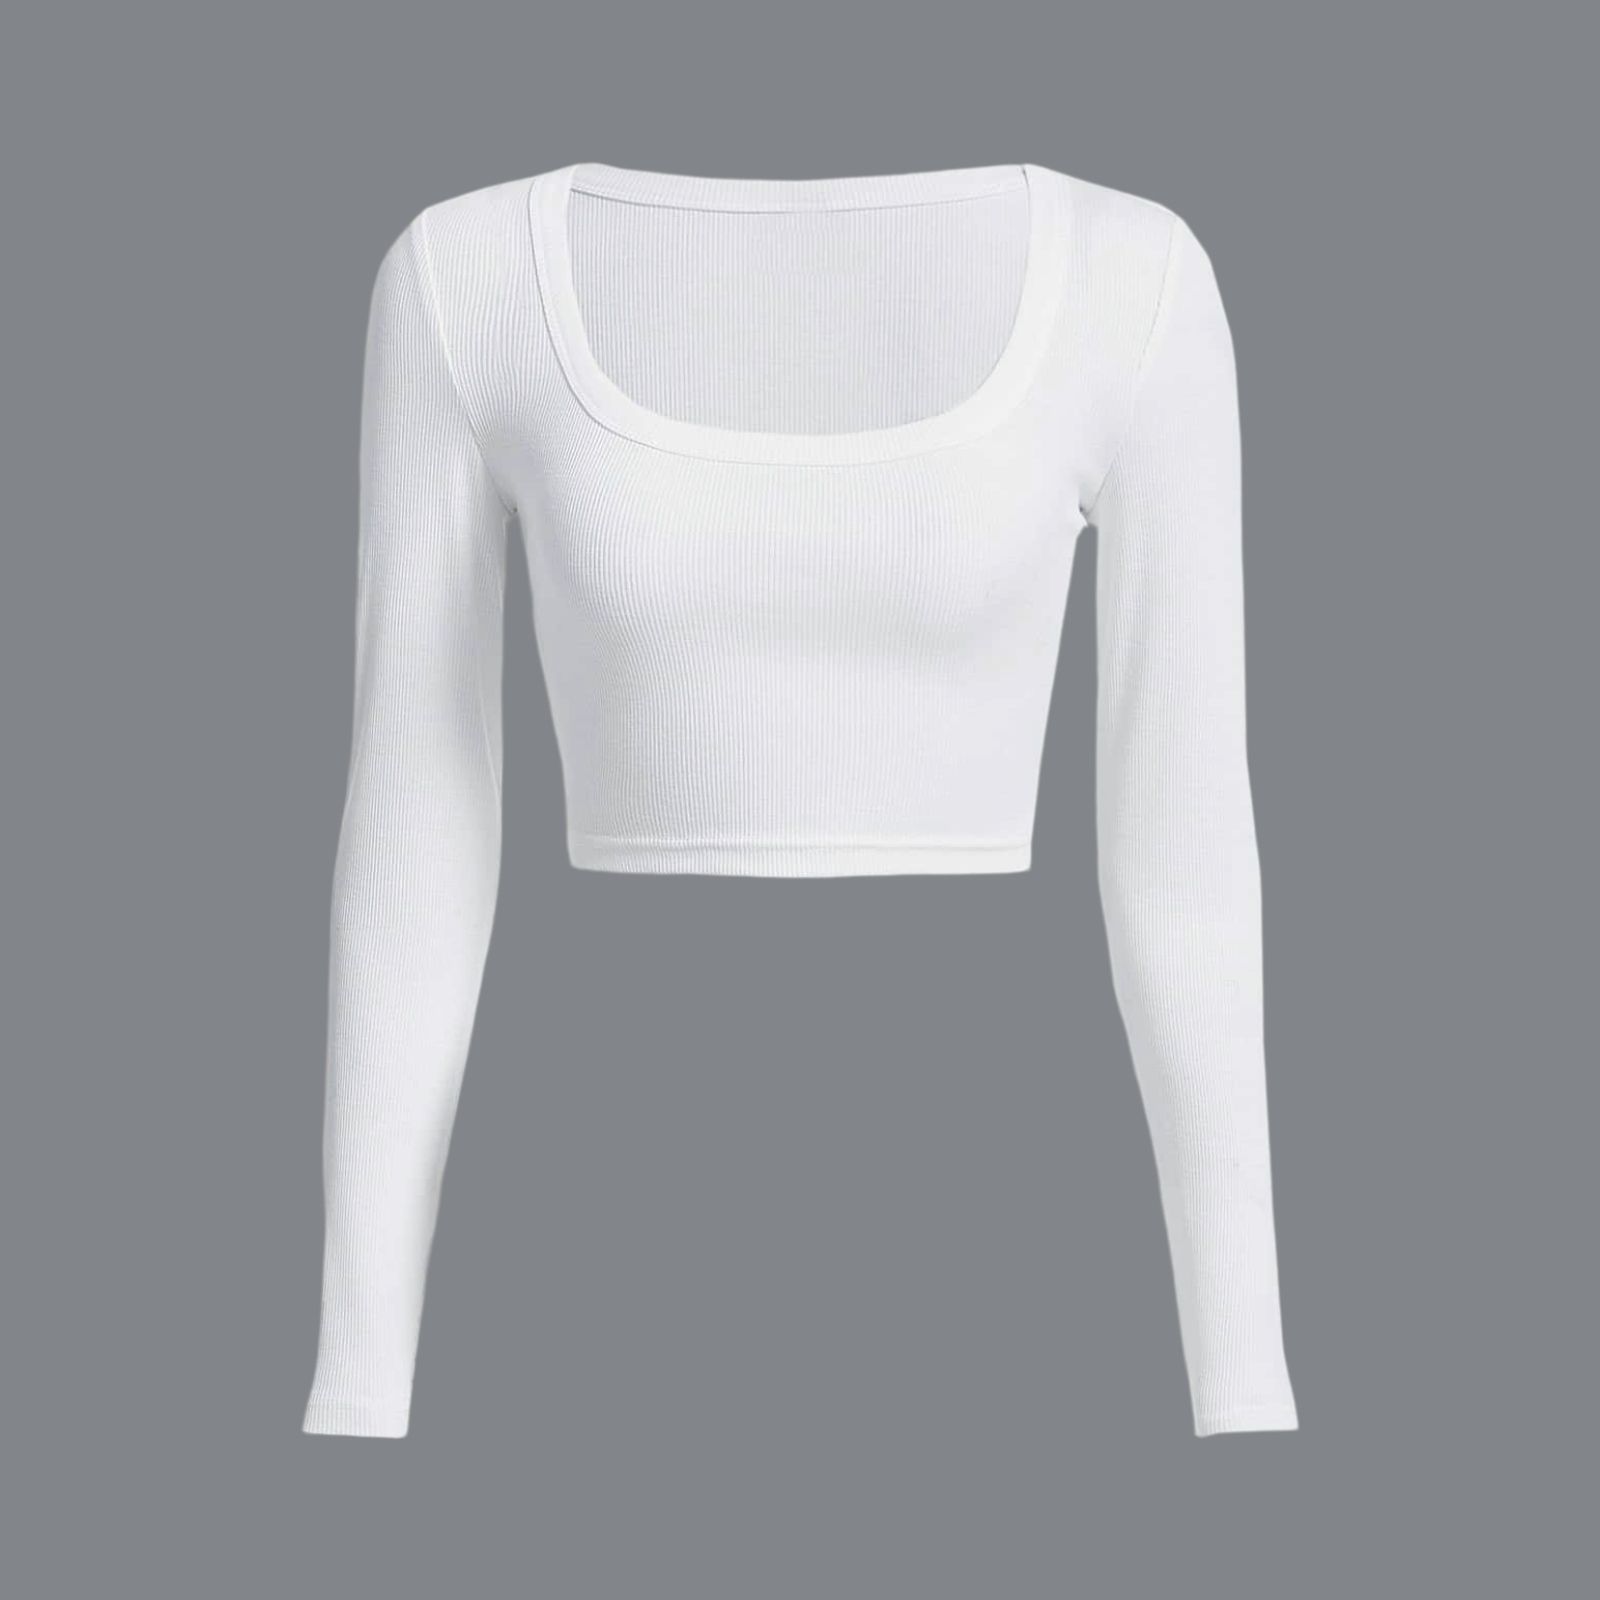 کراپ‌تی شرت آستین بلند زنانه آرمادیا مدل کبریتی یقه اسکوپی -  - 1